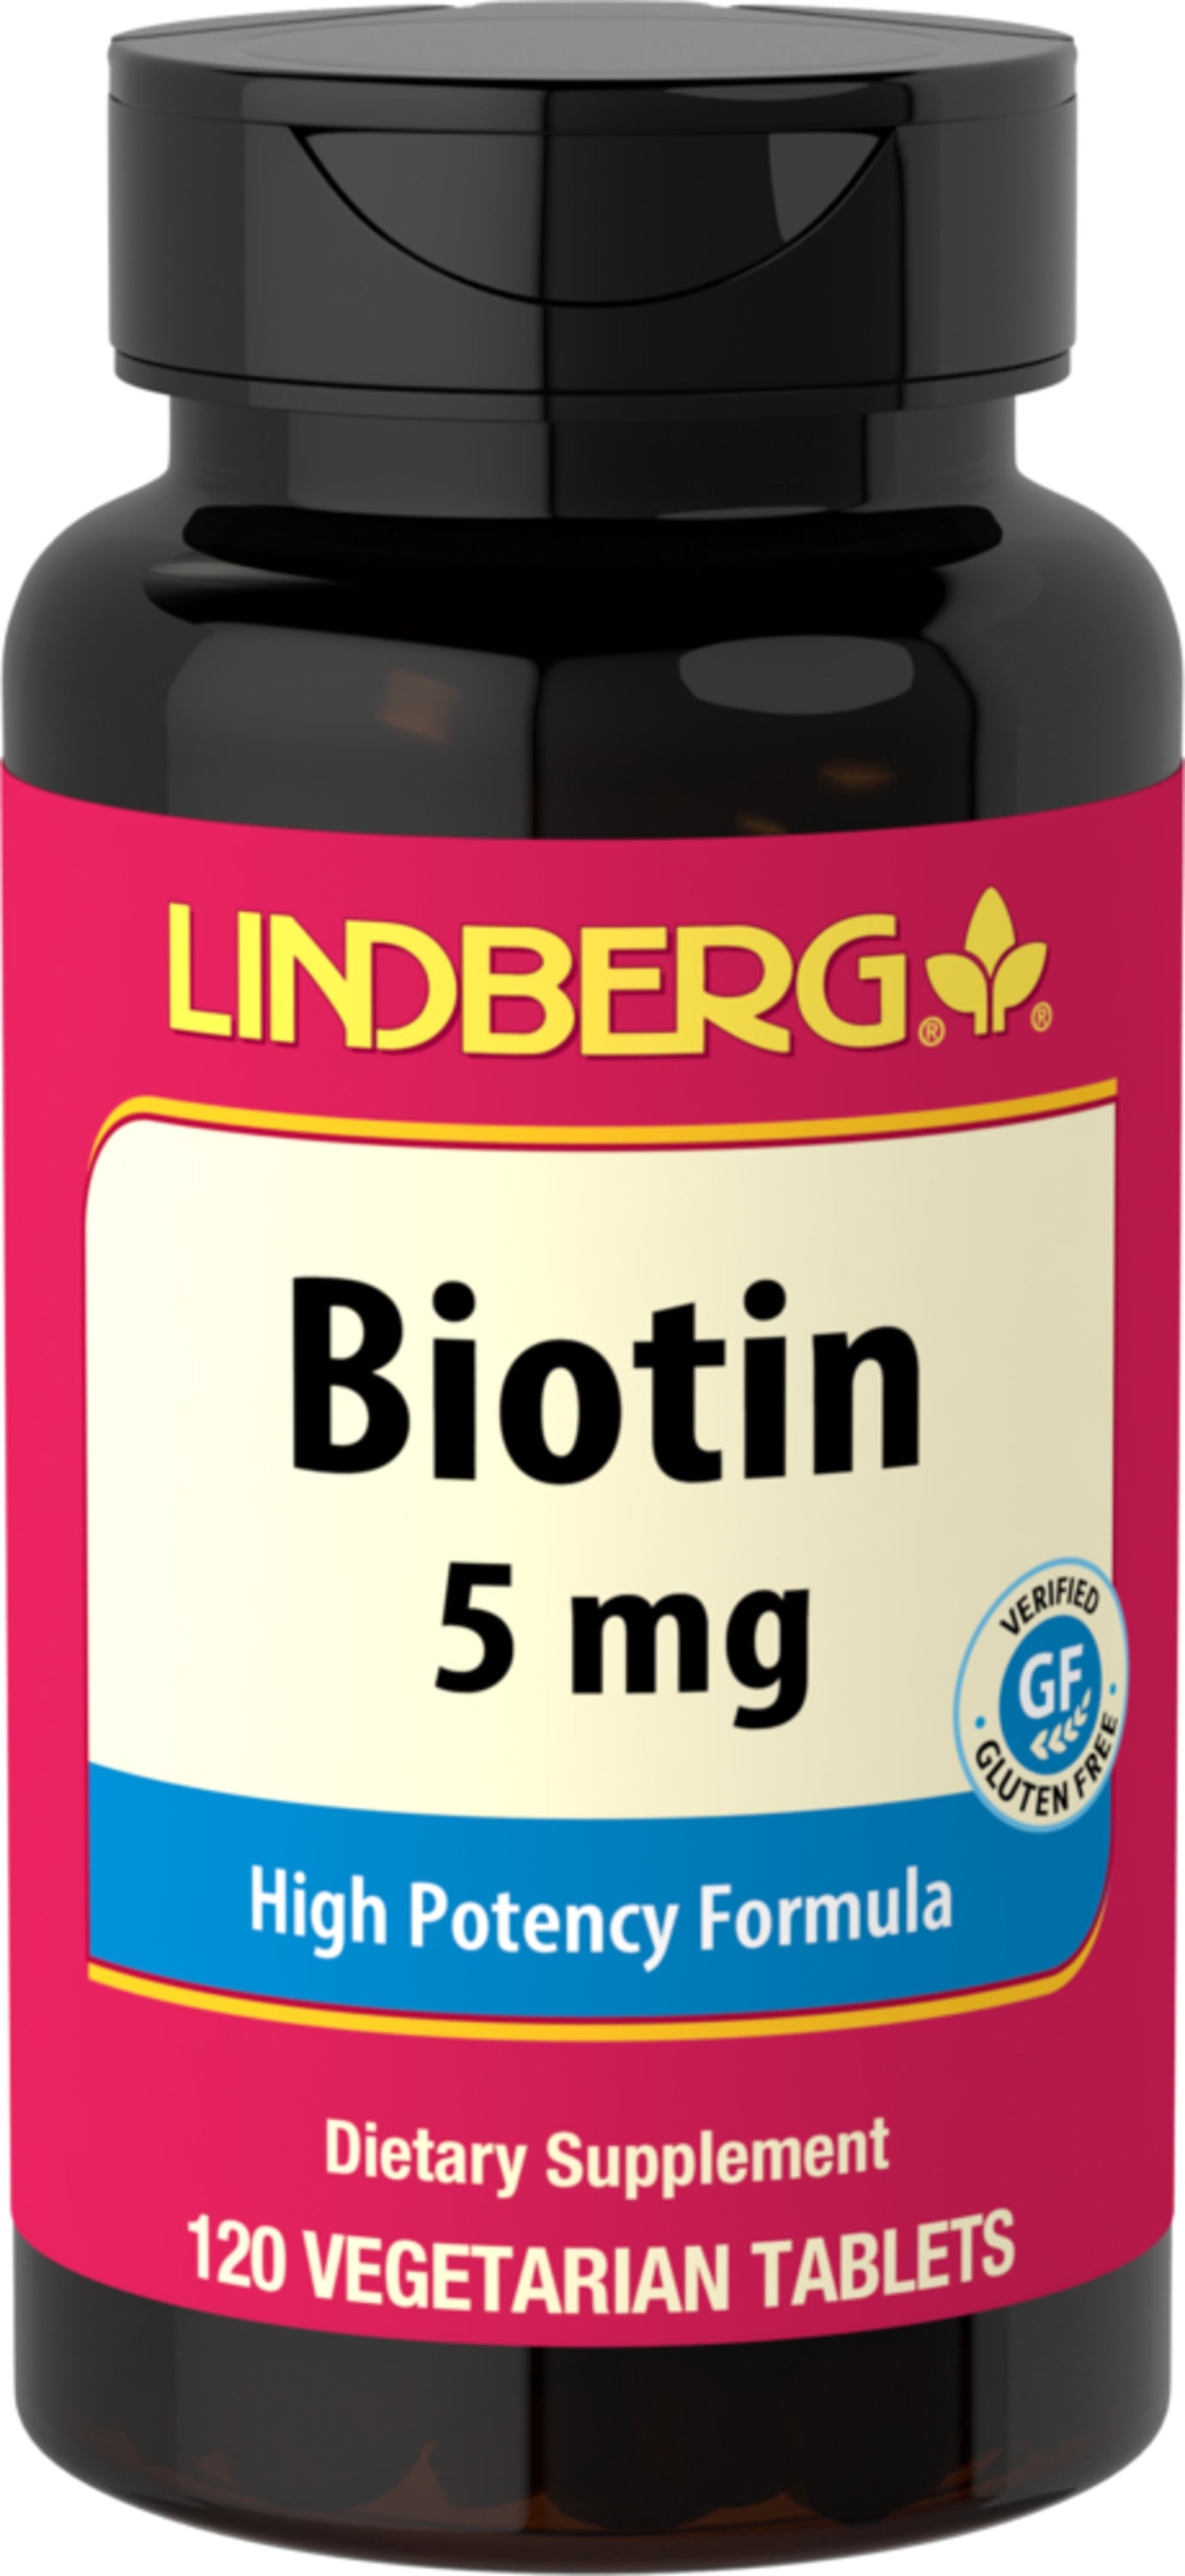 Biotin 5 mg (5000 mcg), 120 Vegetarian Tablets